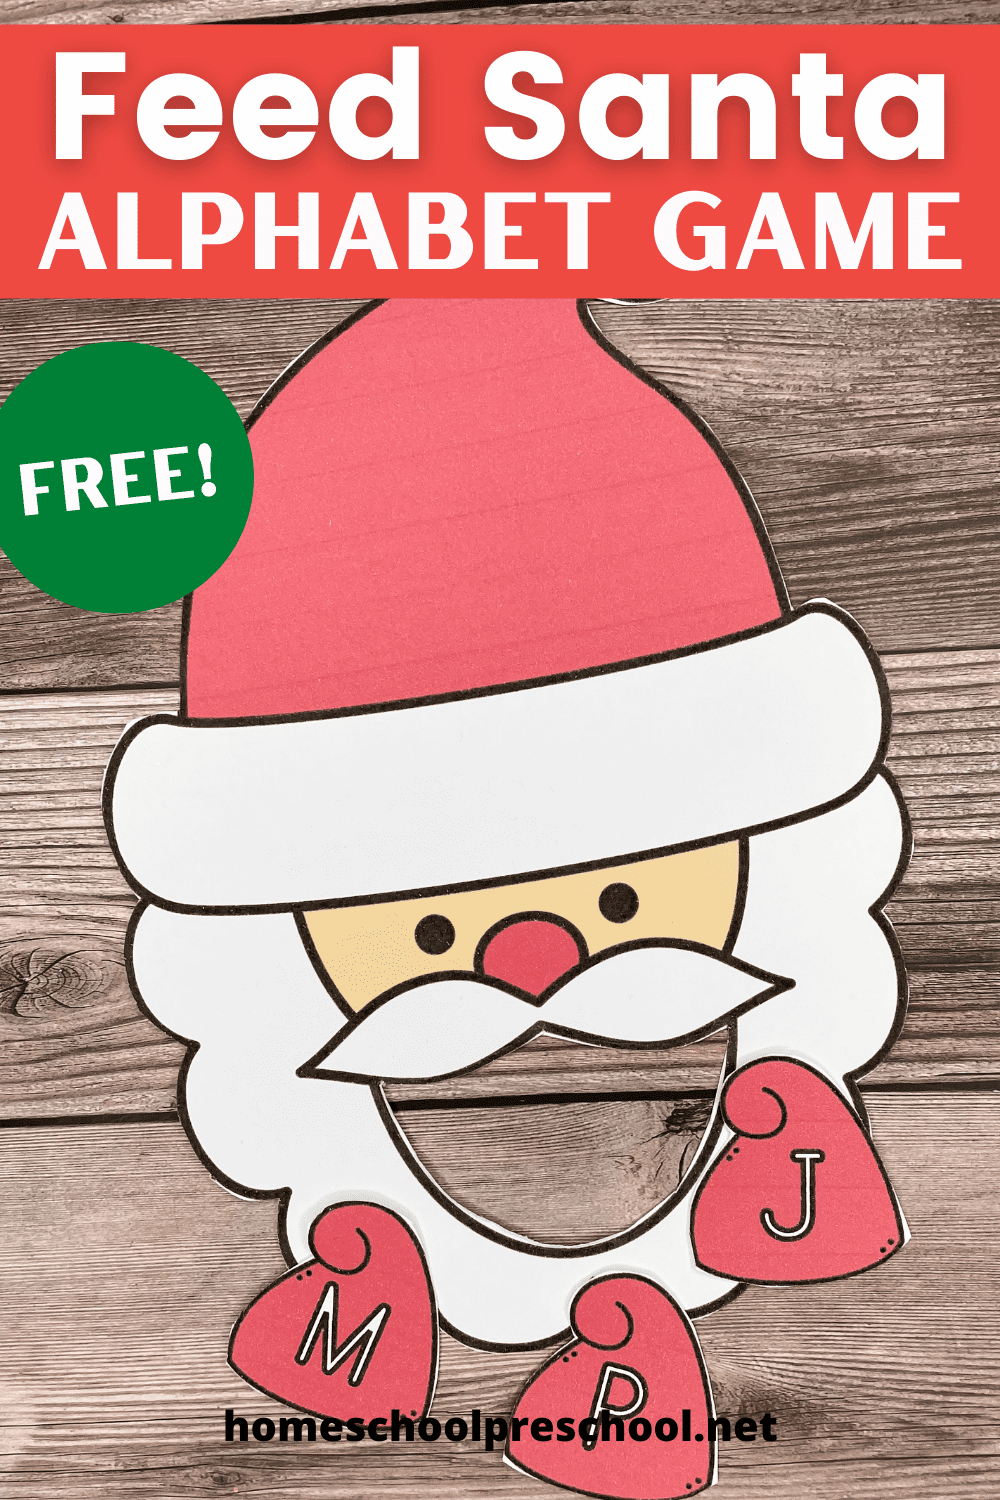 feed-santa-1 Feed Santa Alphabet Game